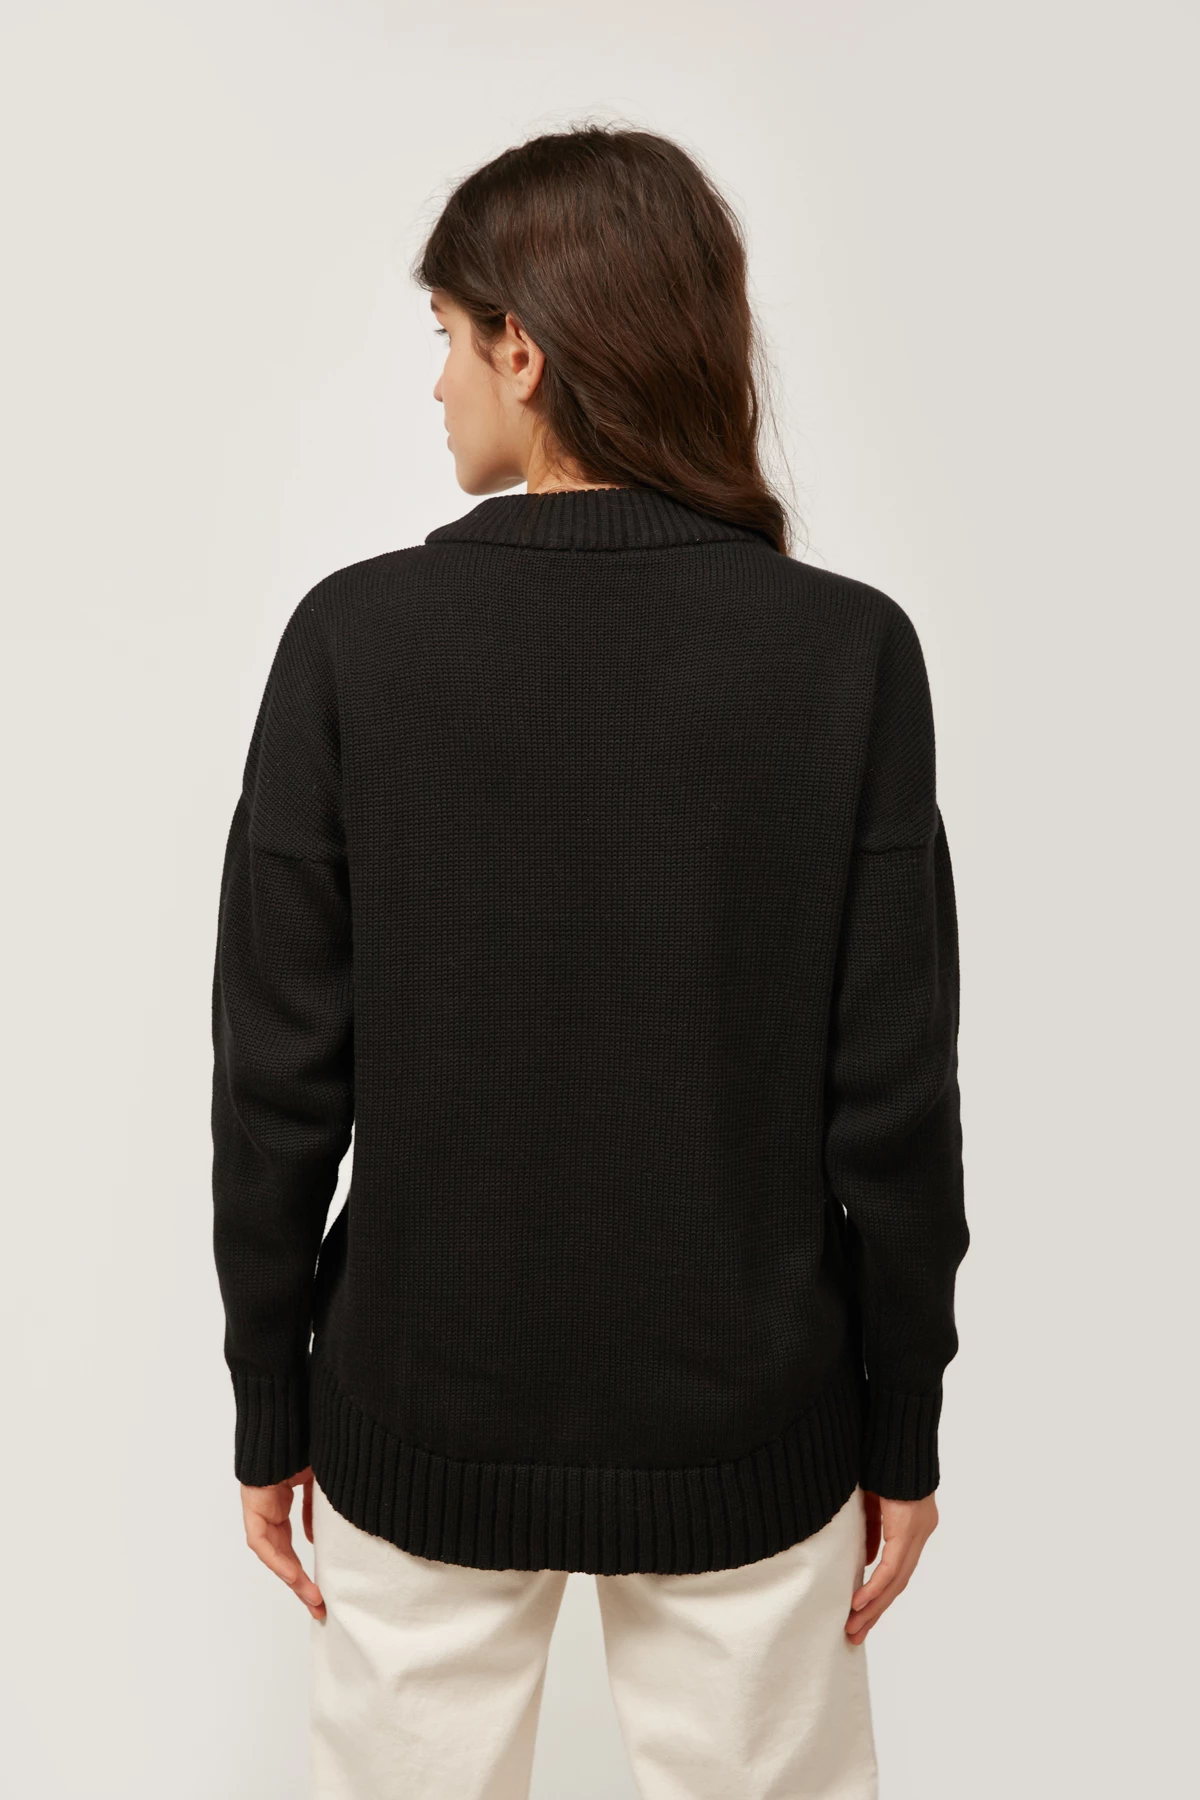 Black cotton sweater, photo 5